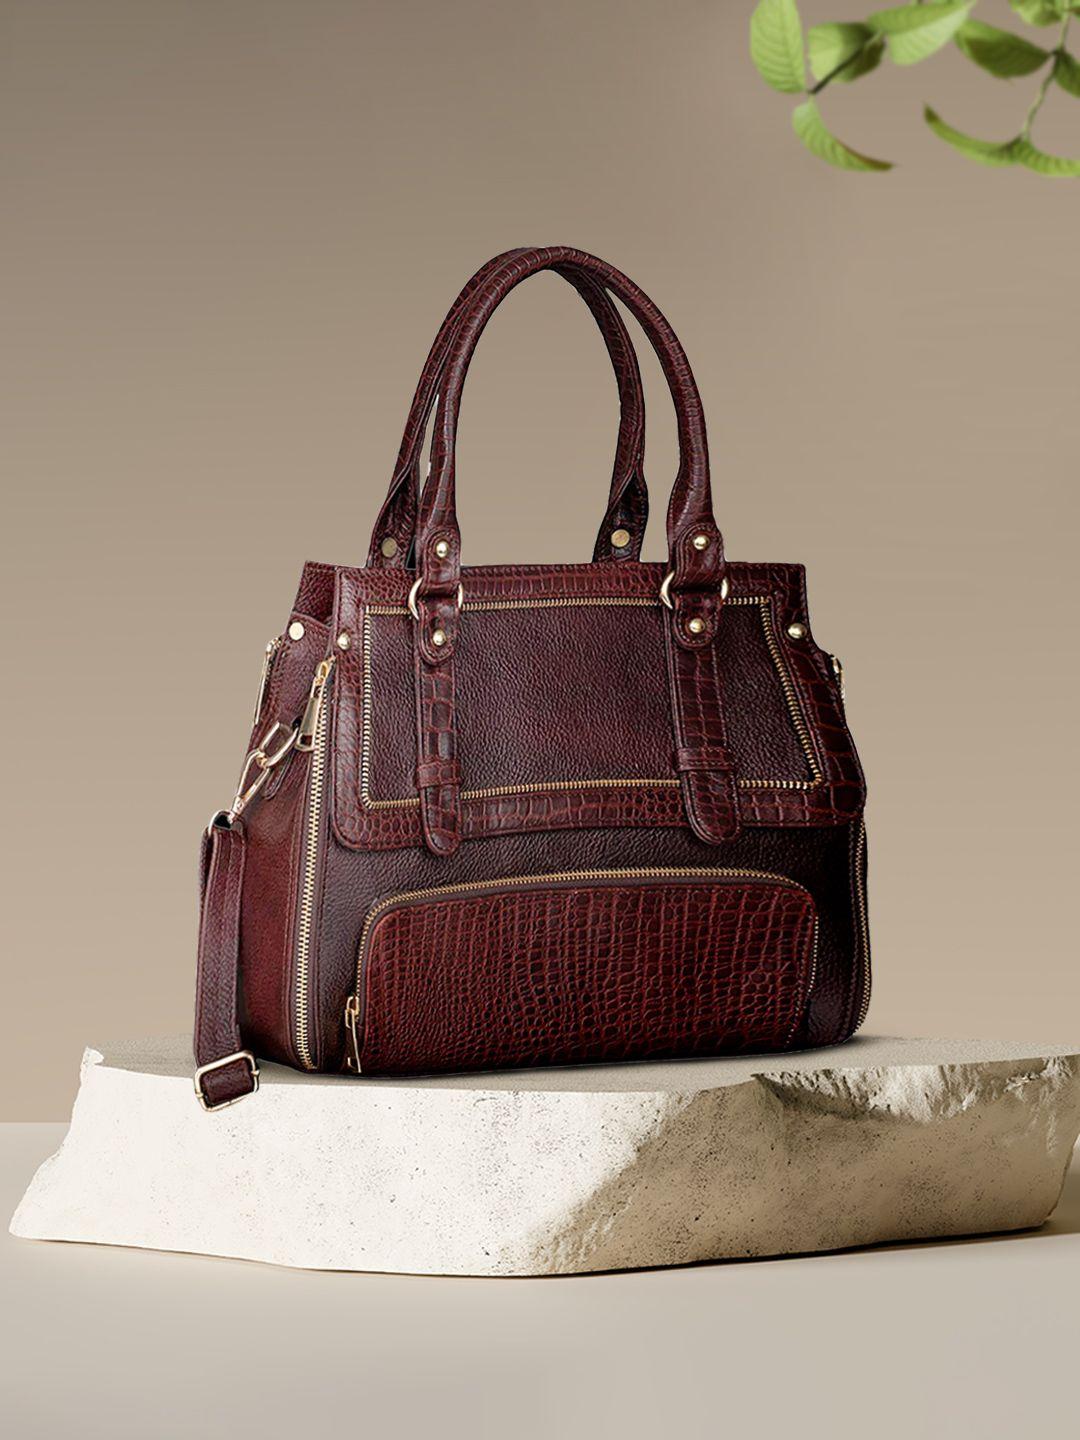 hileder brown leather structured handheld bag with fringed